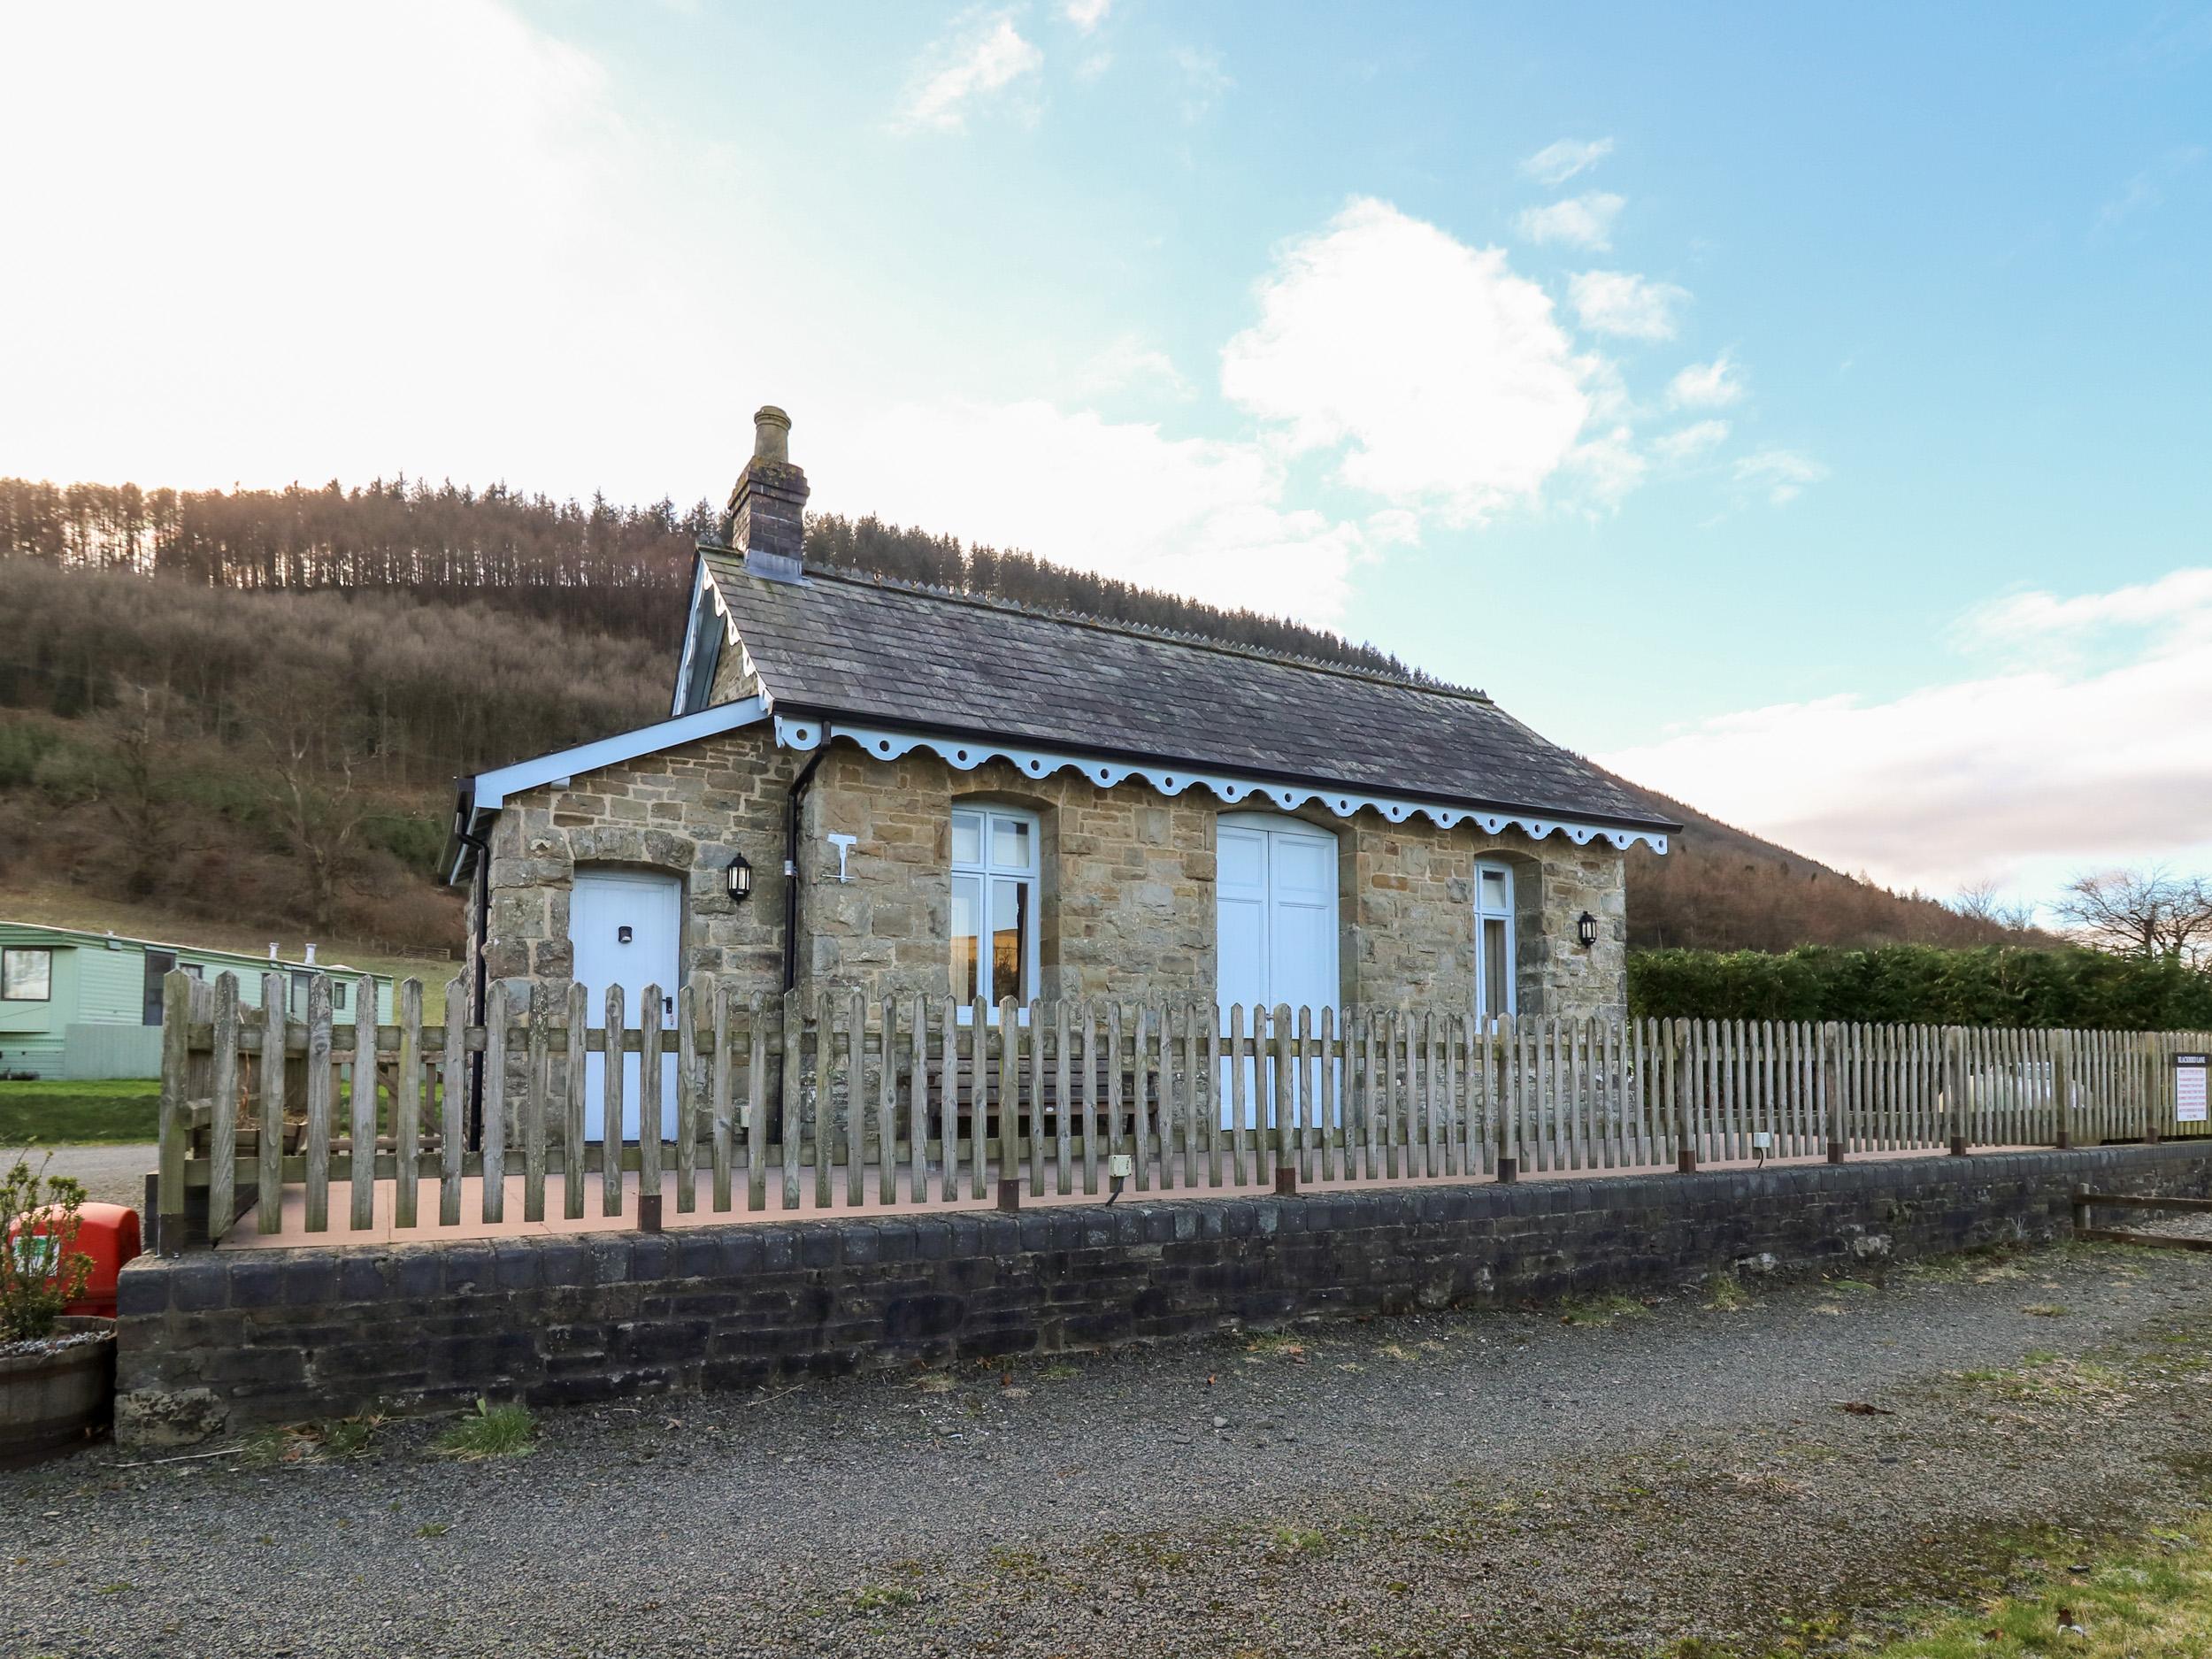 Railway Station Cottage